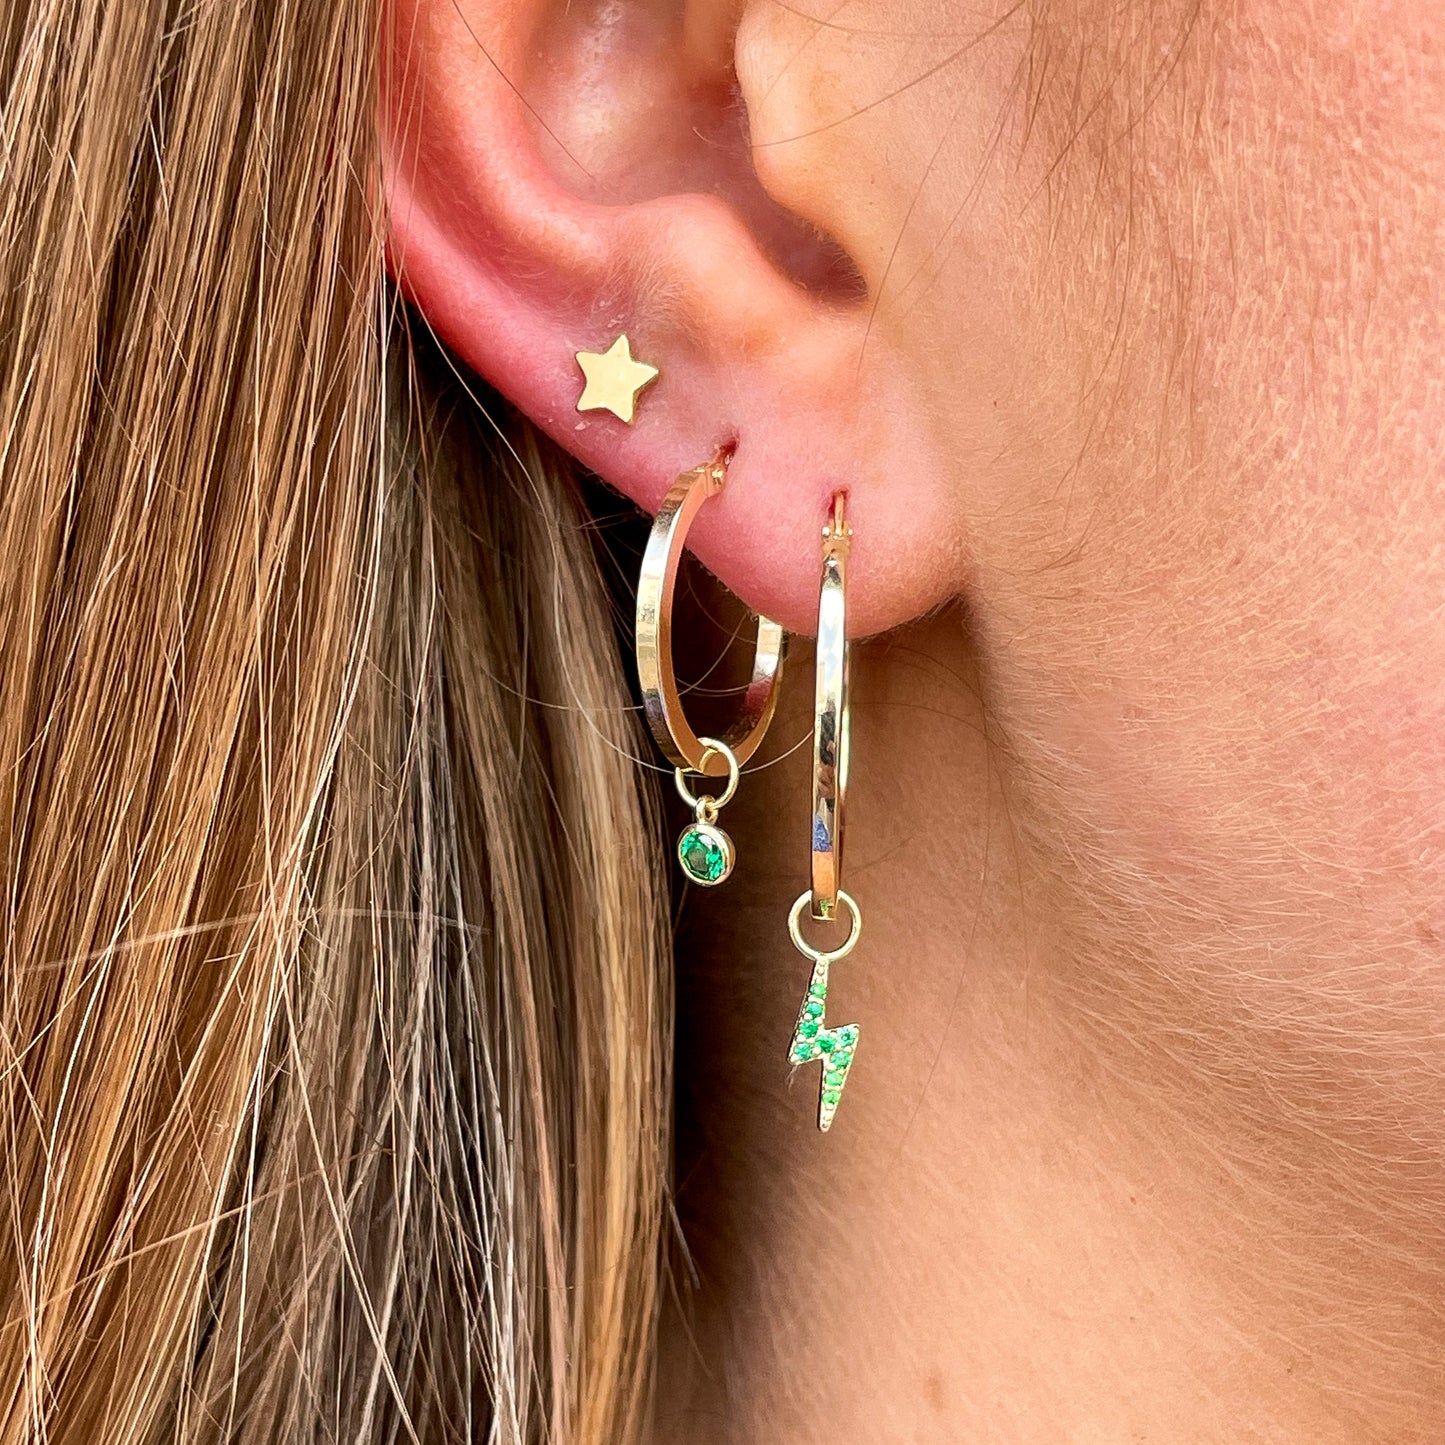 9ct Gold Lightning Bolt Earring Charm | Emerald Green CZ - John Ross Jewellers